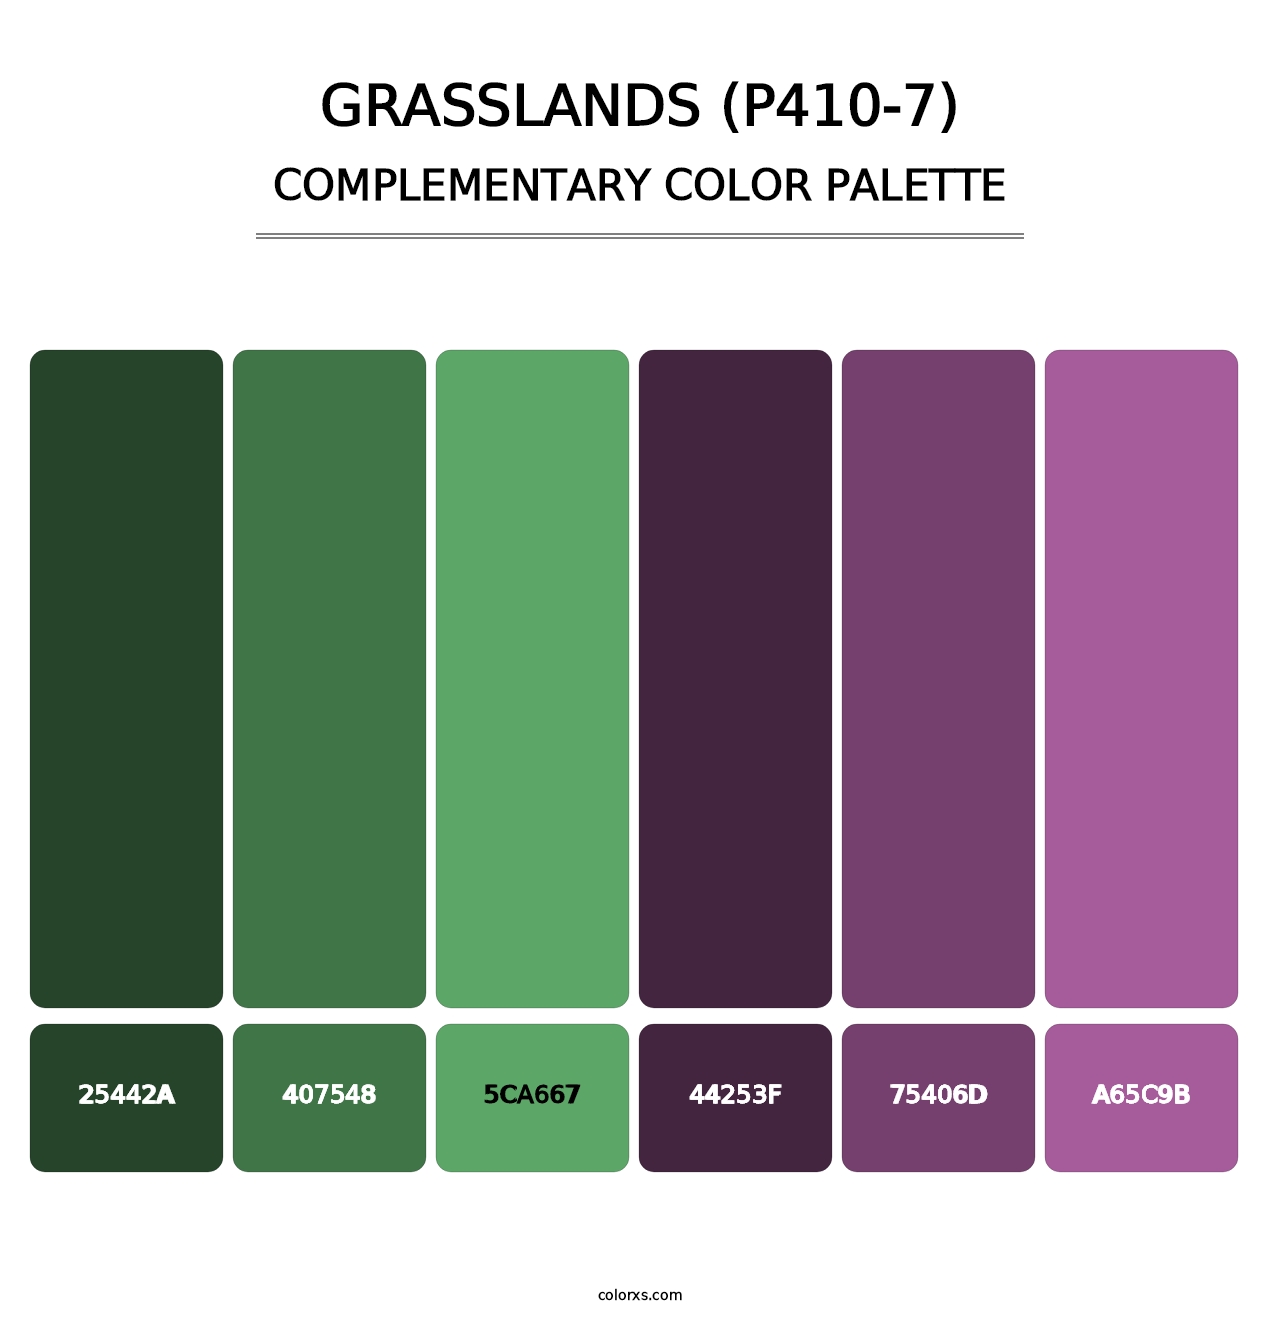 Grasslands (P410-7) - Complementary Color Palette